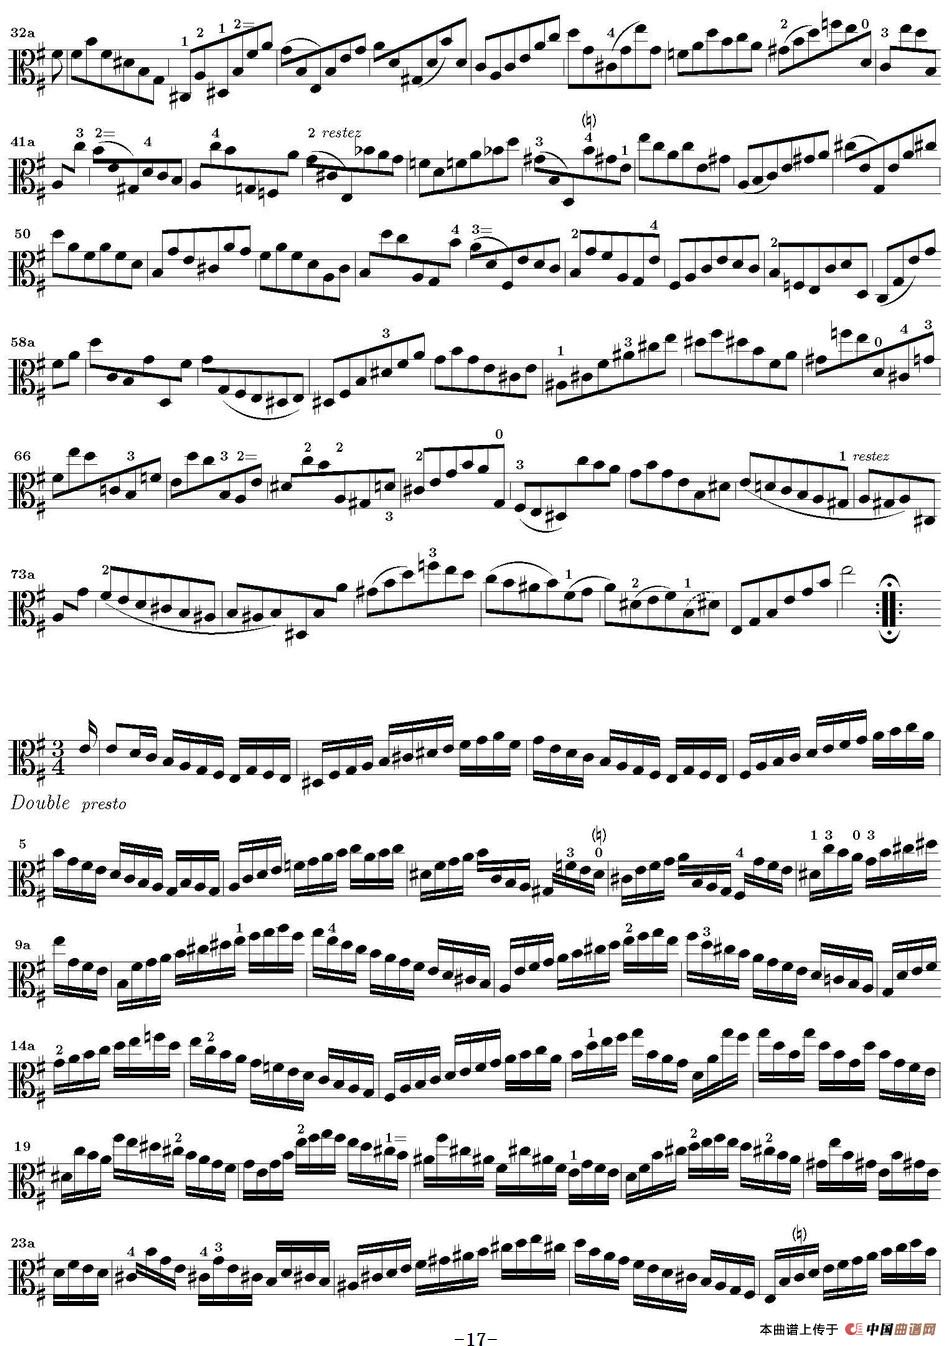 Bach Sonata BWV1002（无伴奏小提琴组曲）